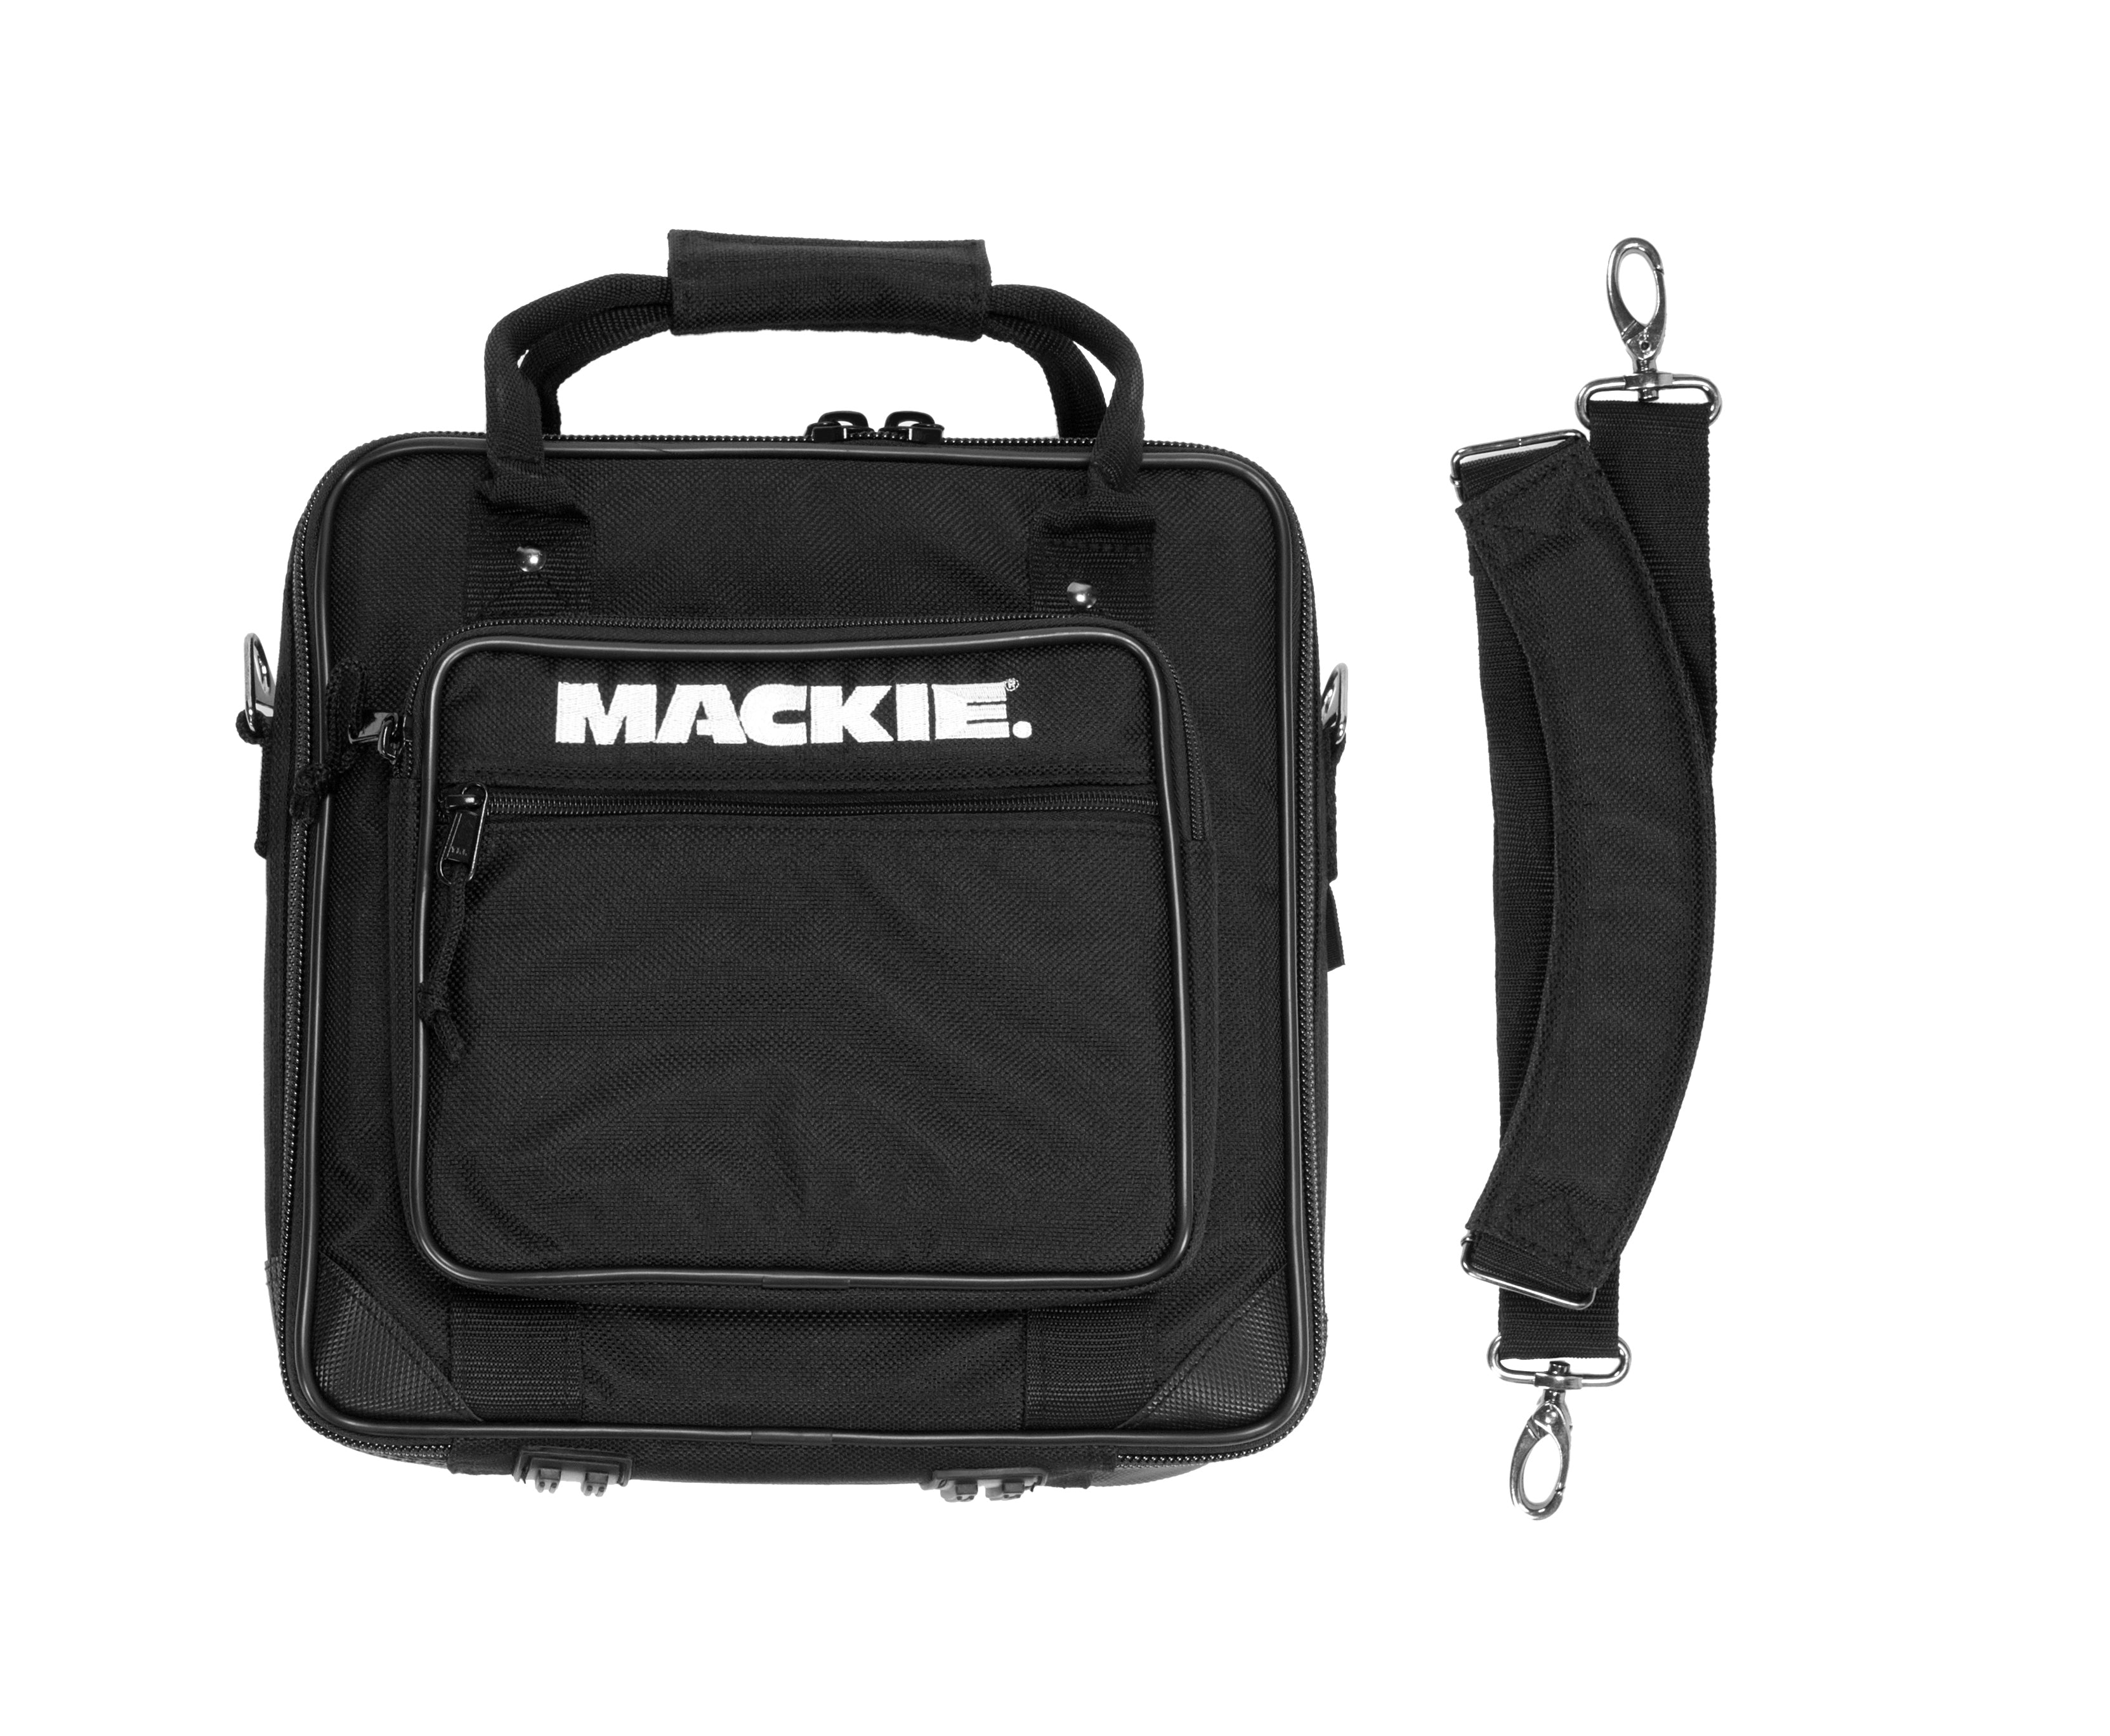 Mackie 1604-VLZ Bag